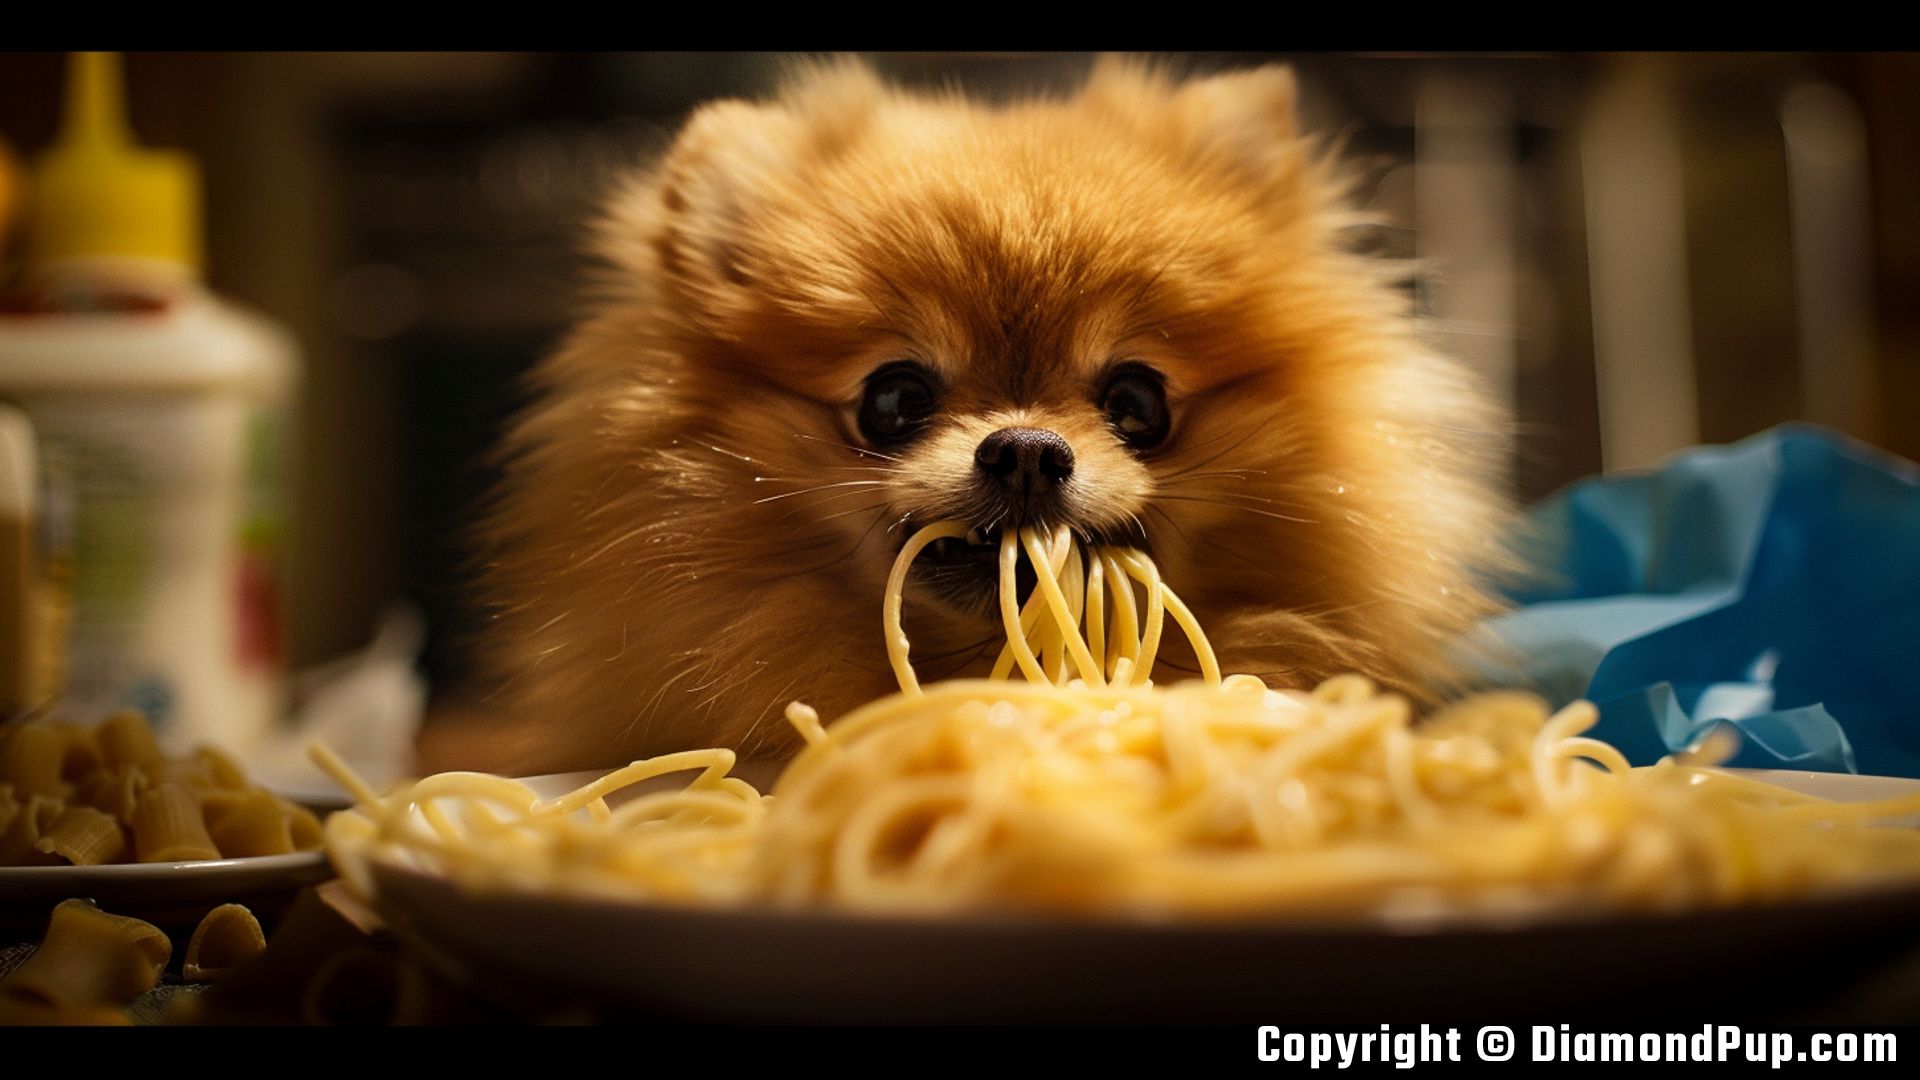 Photograph of a Happy Pomeranian Eating Pasta